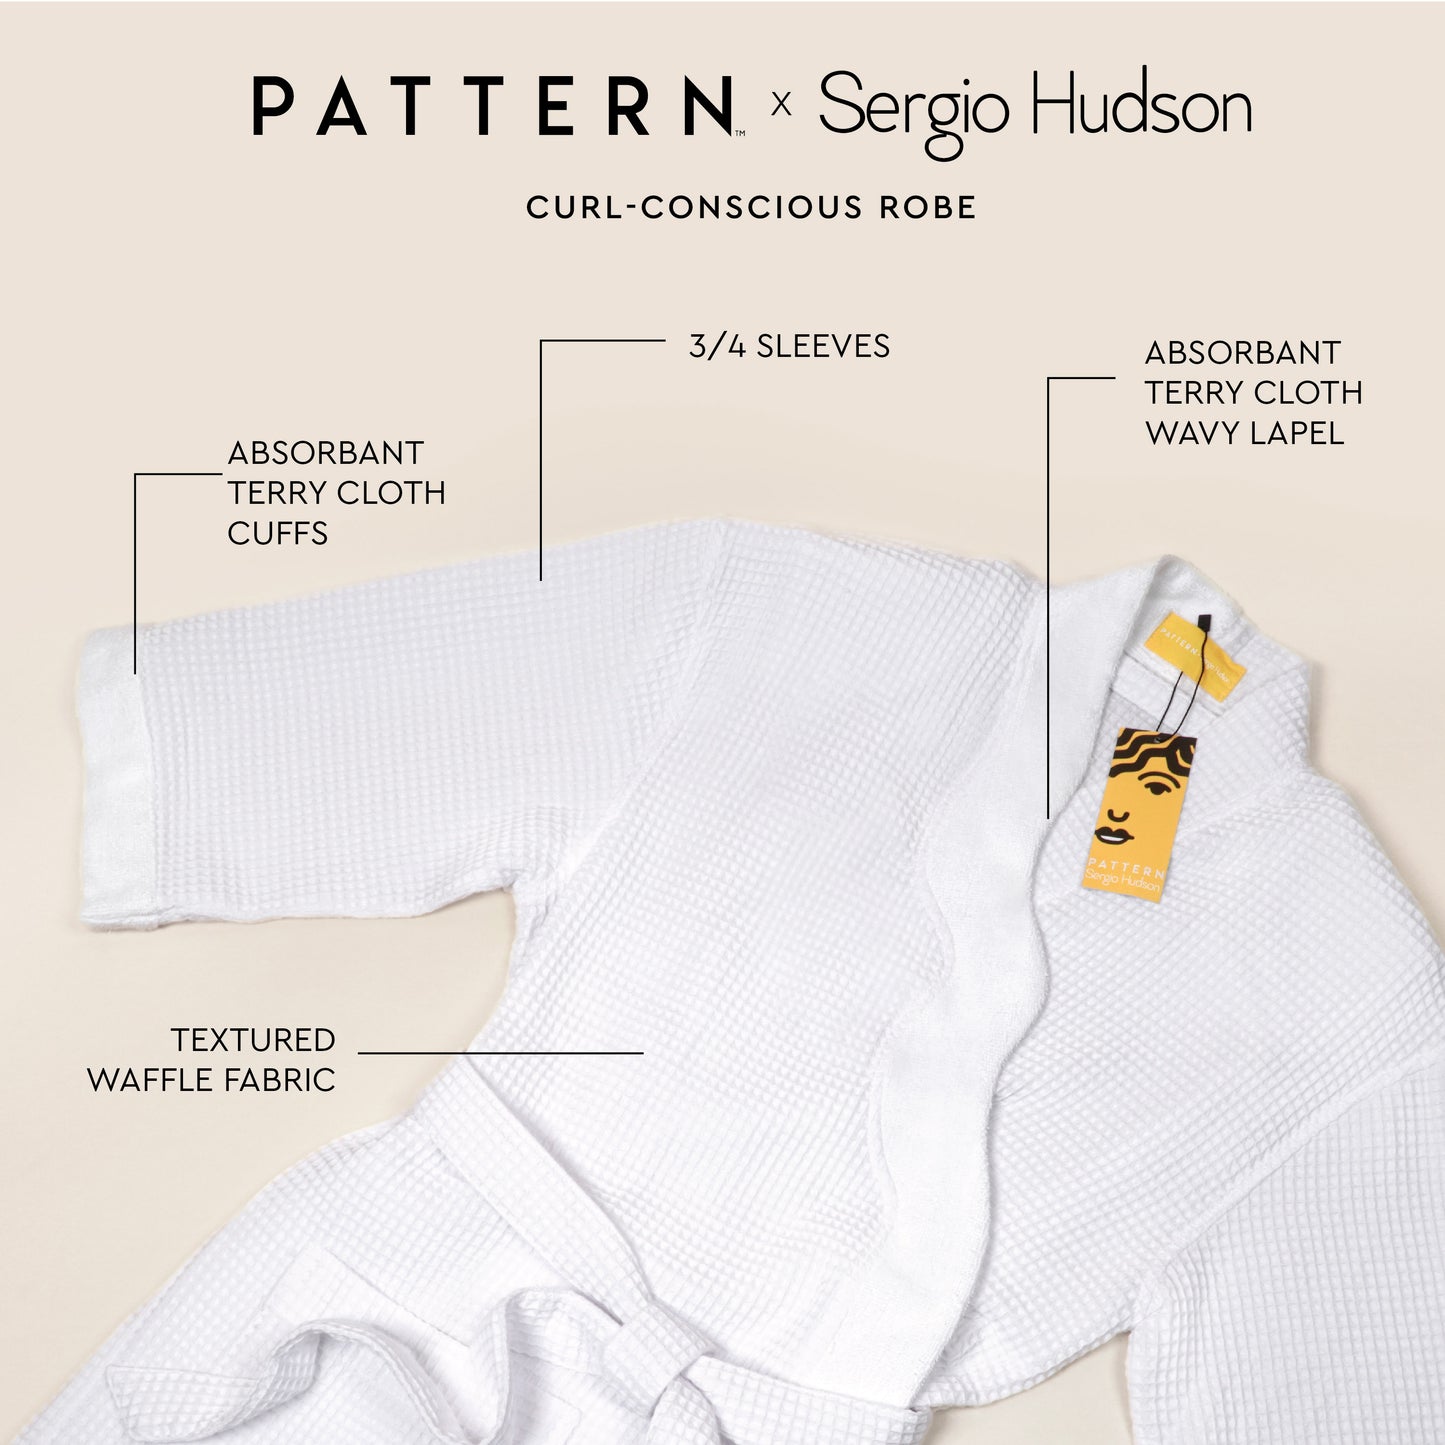 PATTERN x SERGIO HUDSON Curl-Conscious Robe